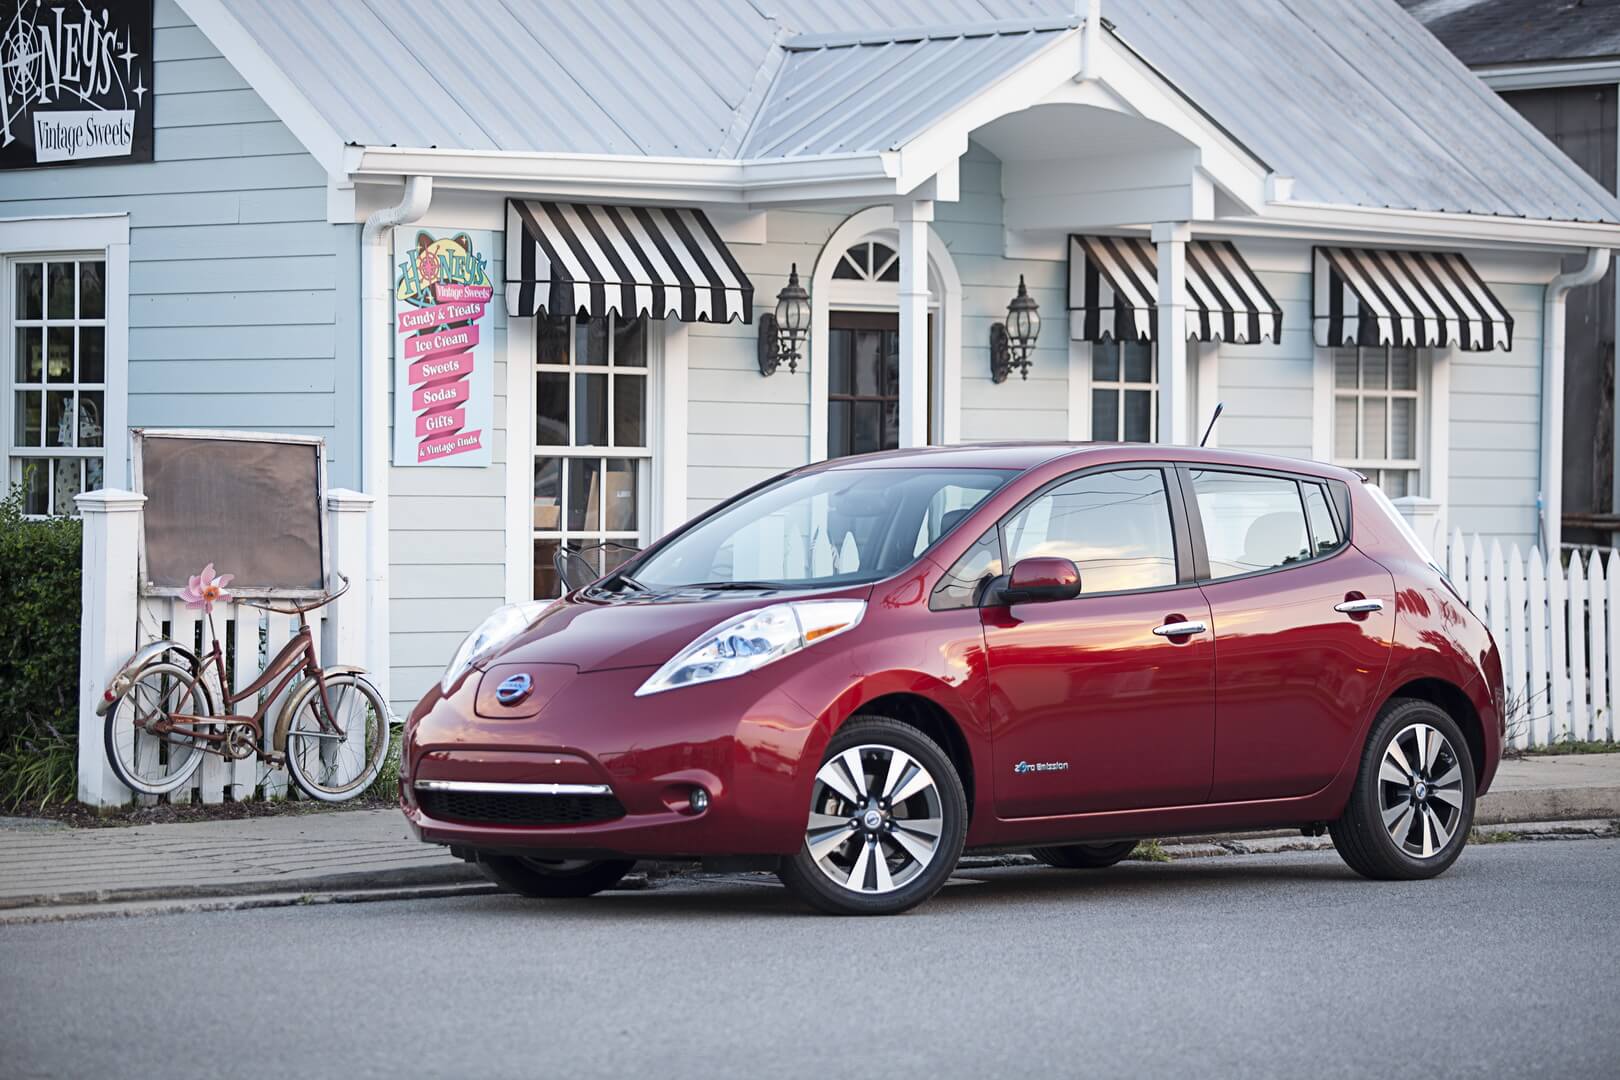 Фотография экоавто Nissan Leaf 2013 (24 кВт•ч) - фото 19